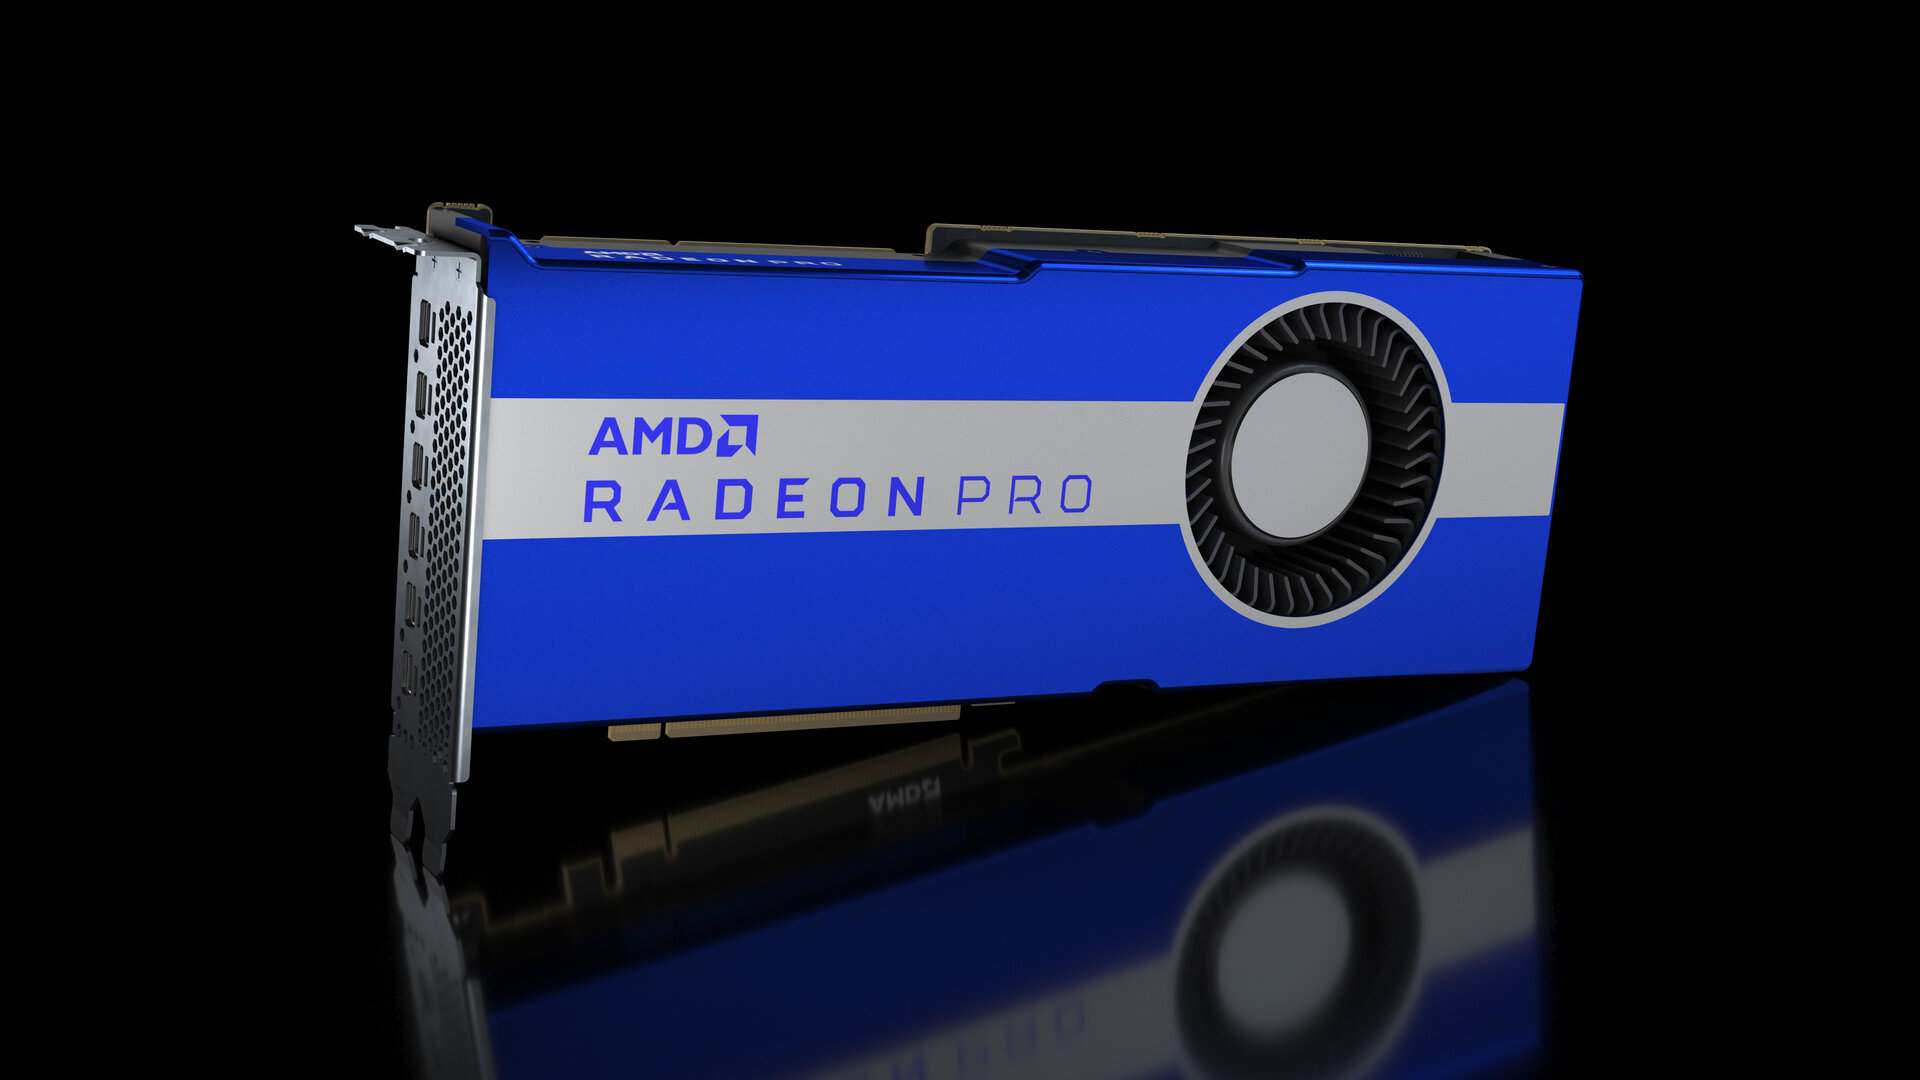 amd radeon pro vii 8 เอเอ็มดีเปิดตัวการ์ดจอ AMD Radeon PRO VII รุ่นใหม่ล่าสุดสำหรับมืออาชีพโดยเฉพาะ 